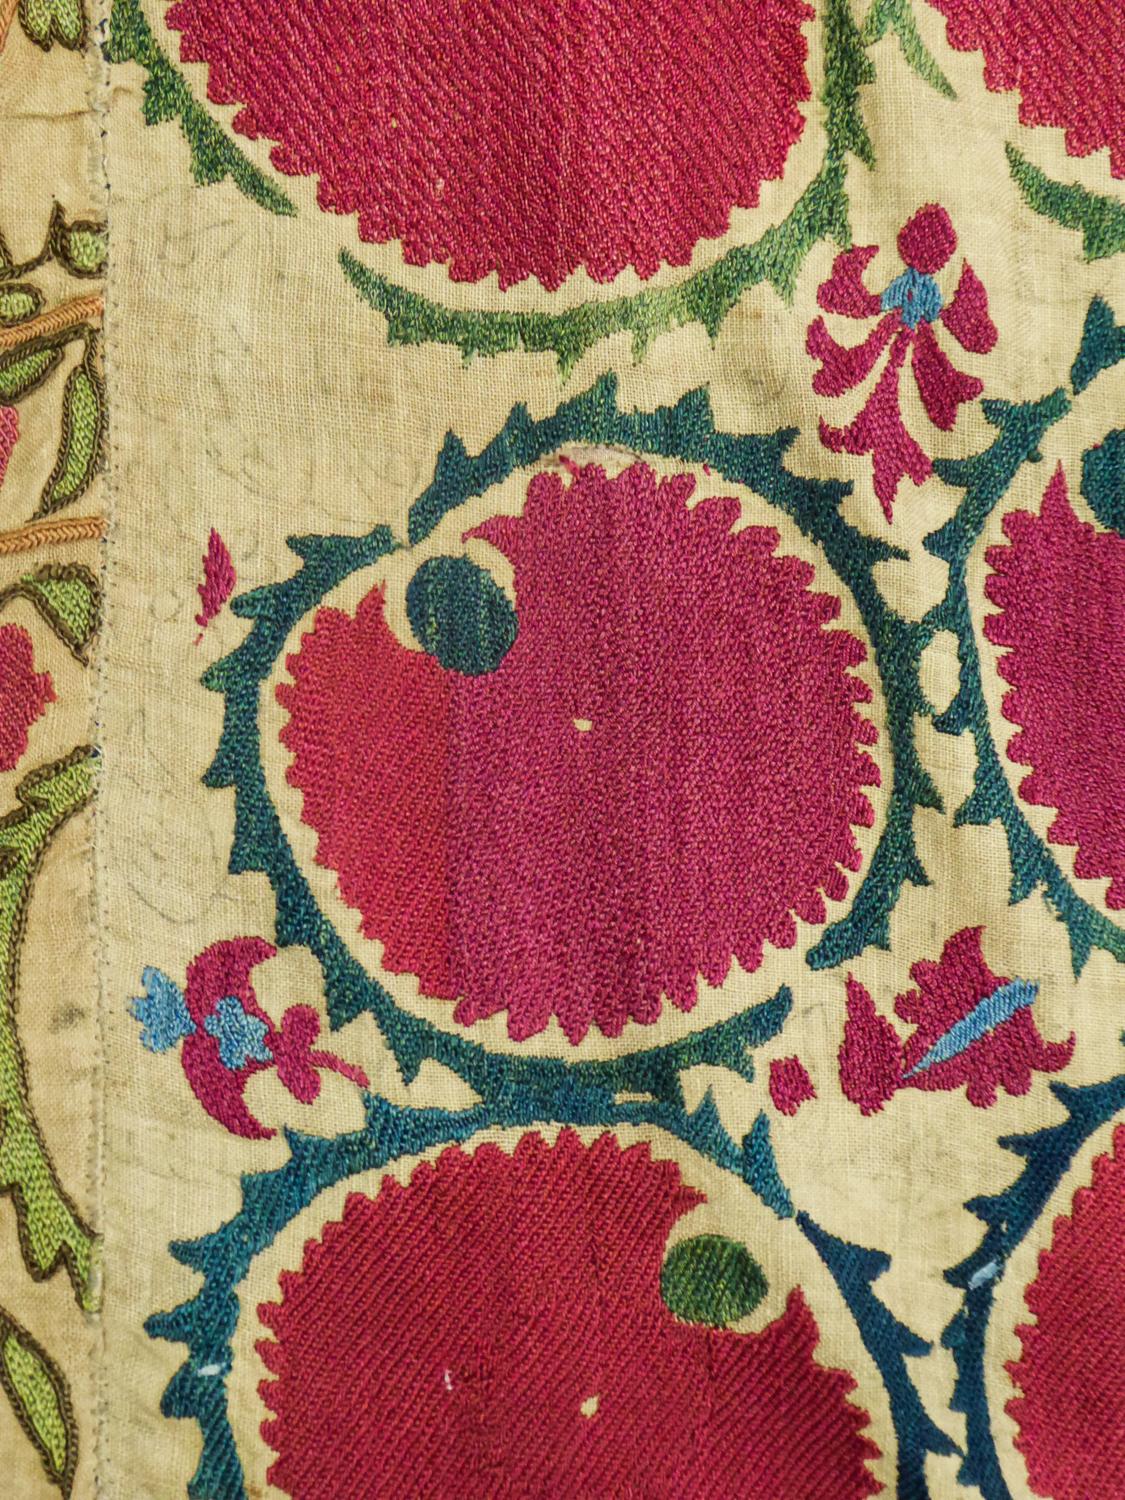 Suzani or Paradise’s Garden Embroidered with Silk - Uzbekistan late 19th Century 11